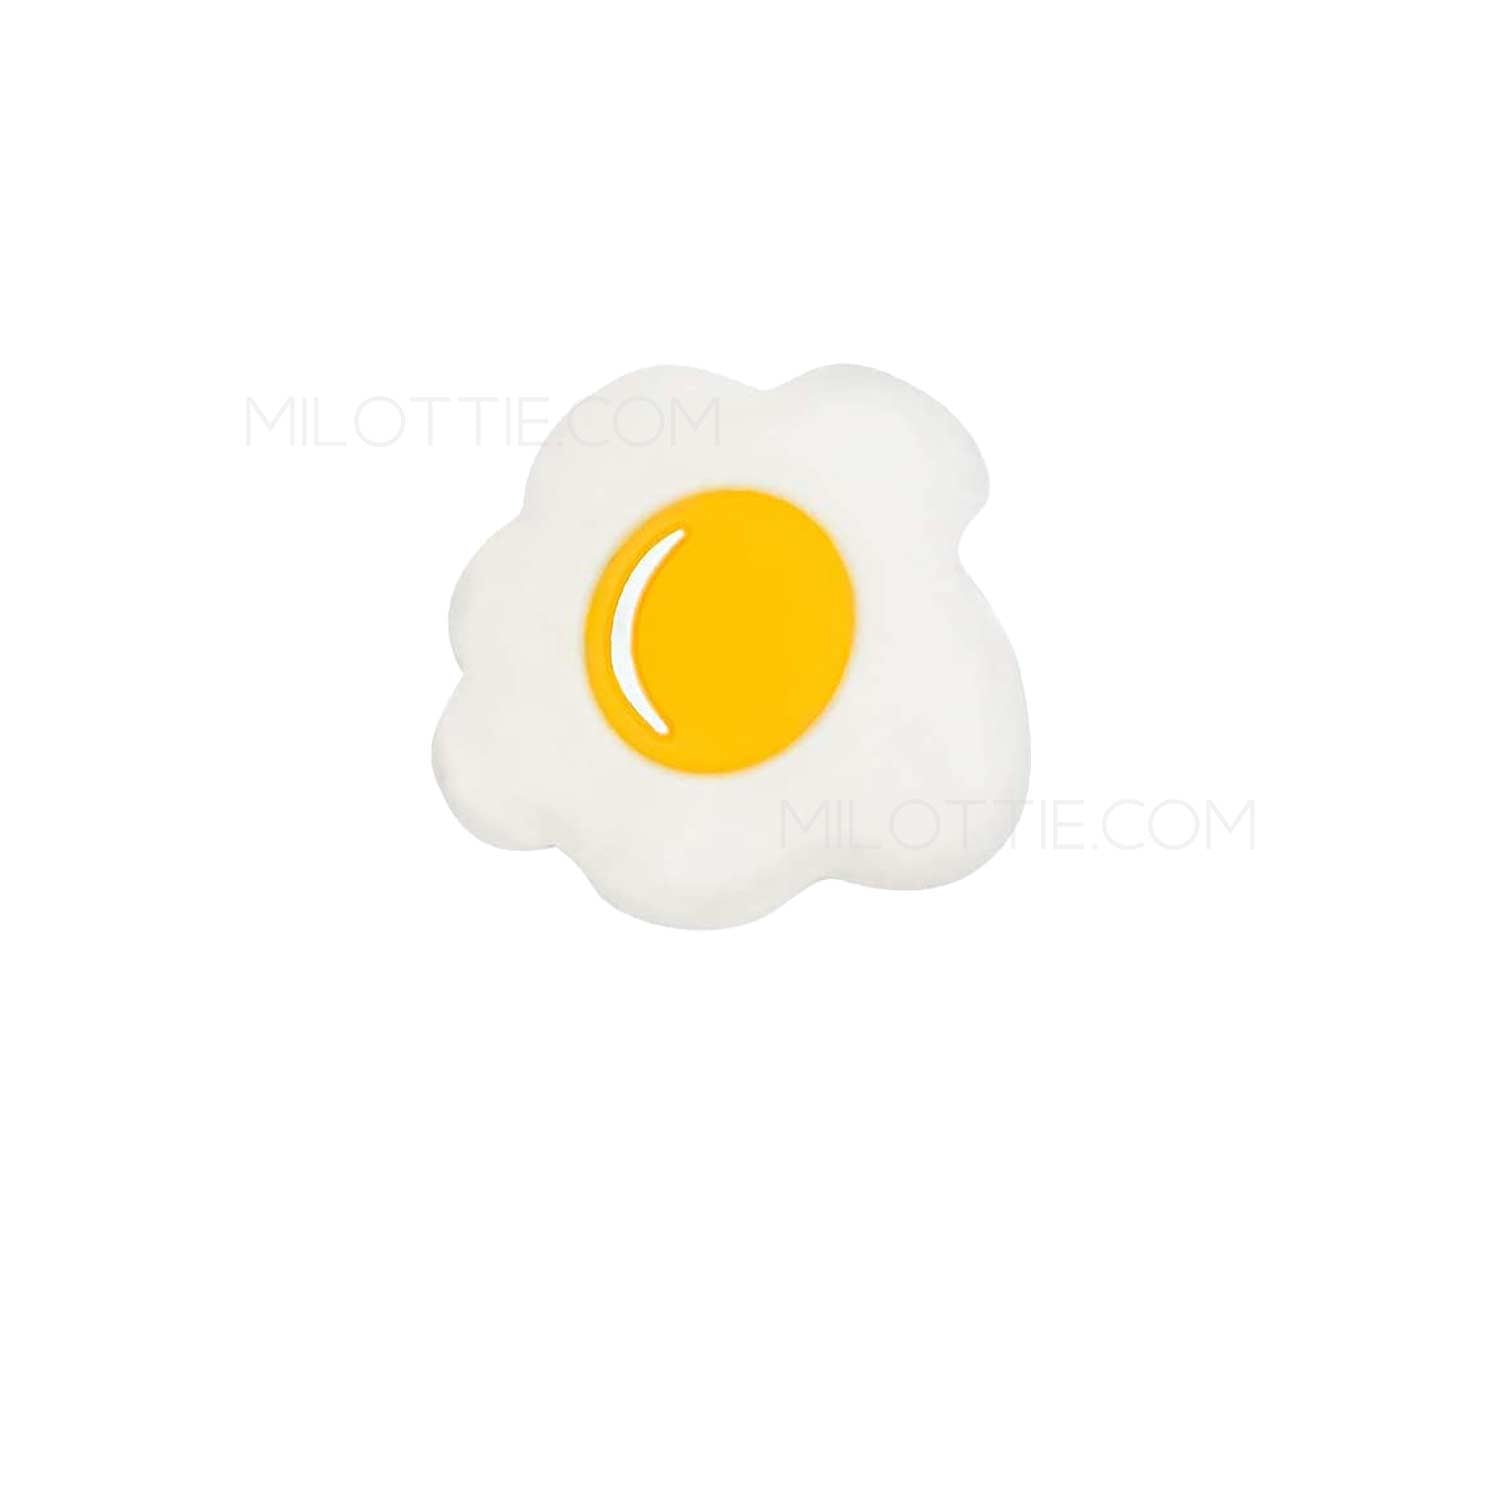 Egg cable protector - Milottie